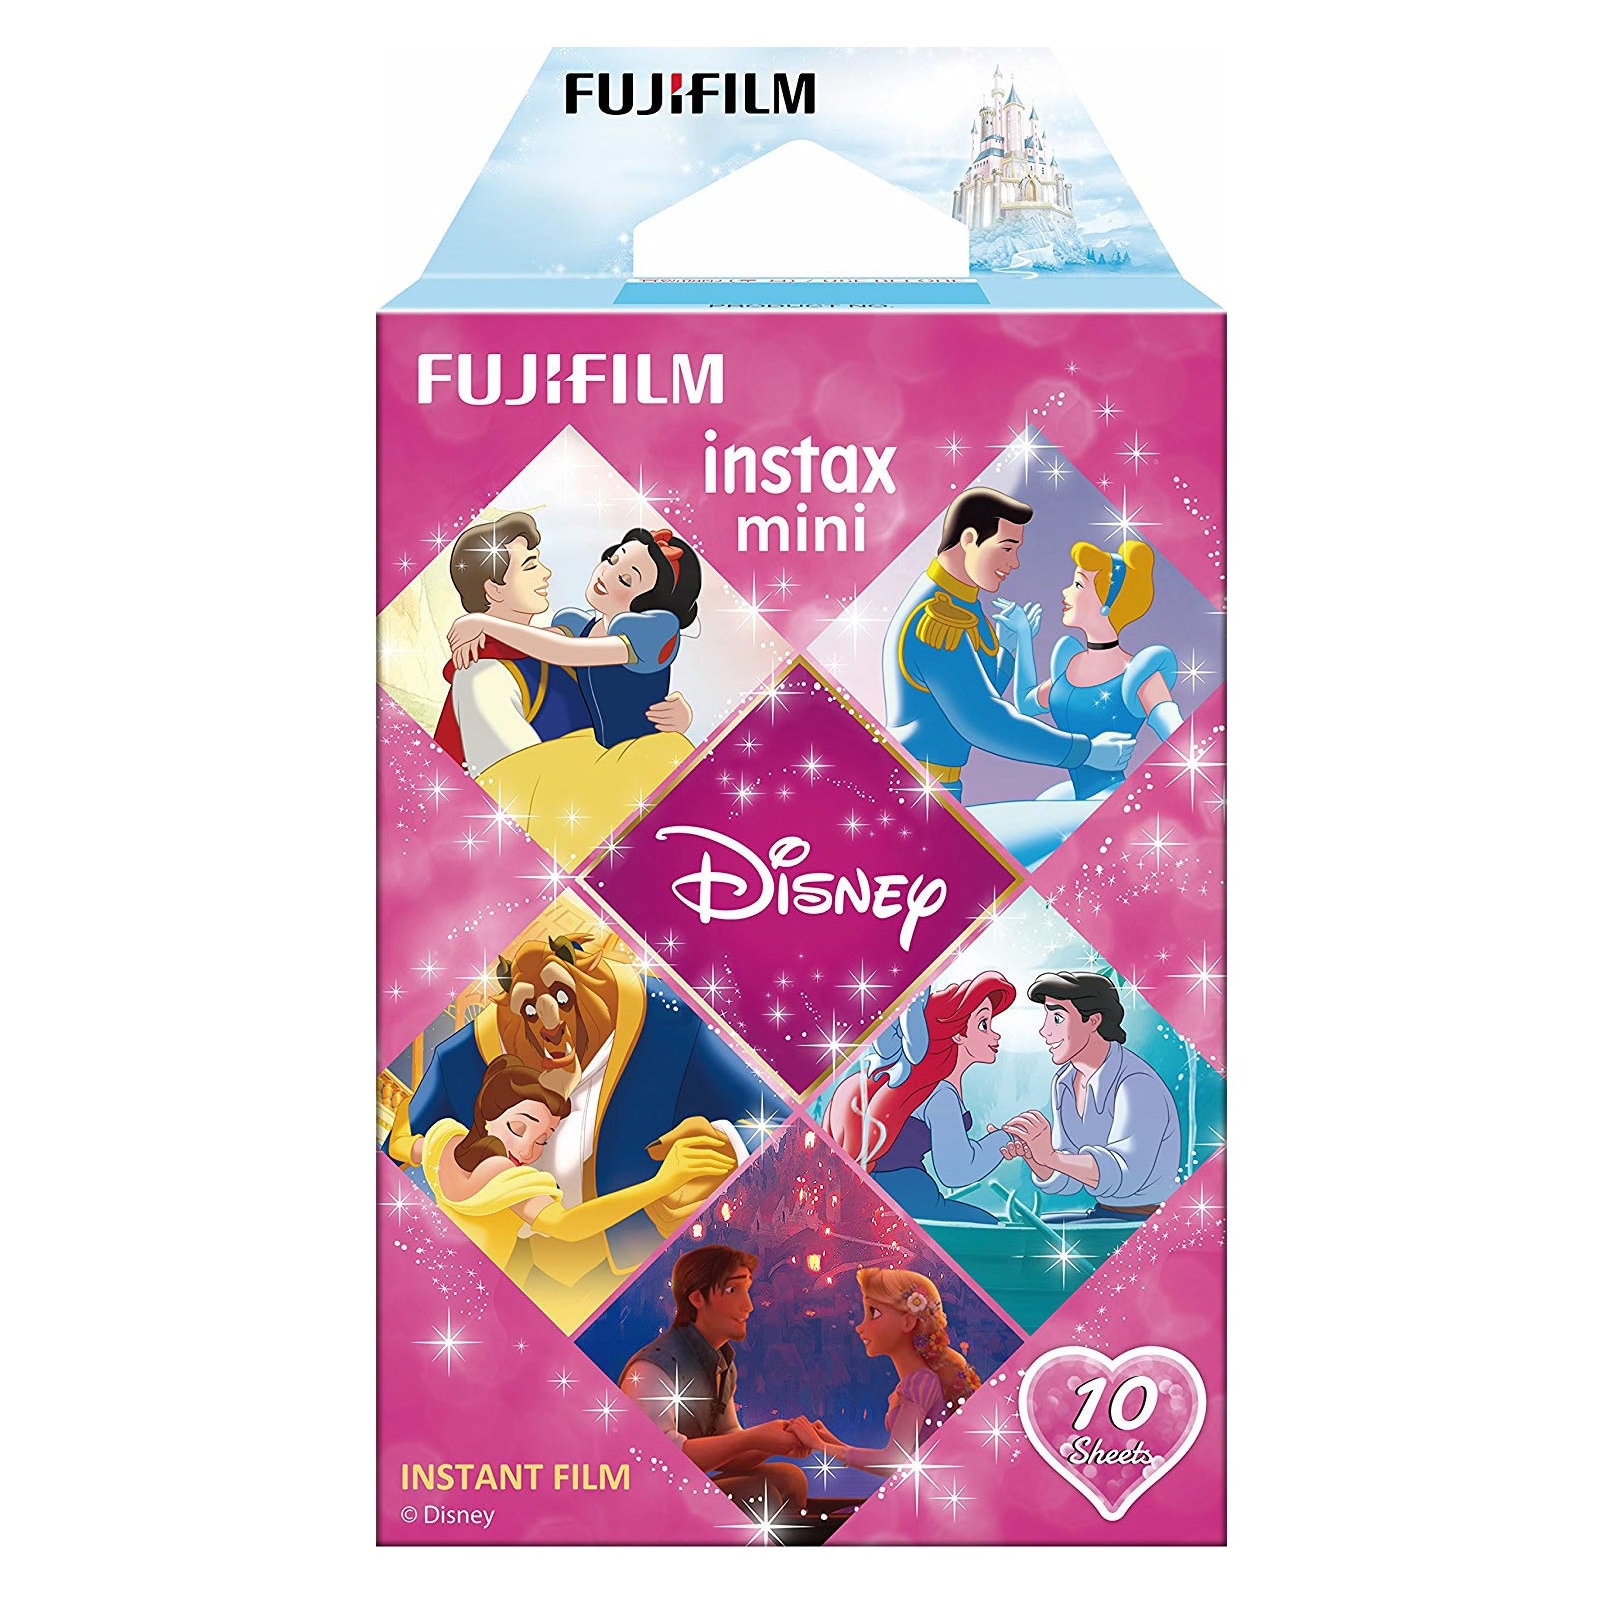 kunst Attent strand Free Shipping 1 Pack Fujifilm Fuji Instax Mini Picture Disney - Etsy Finland